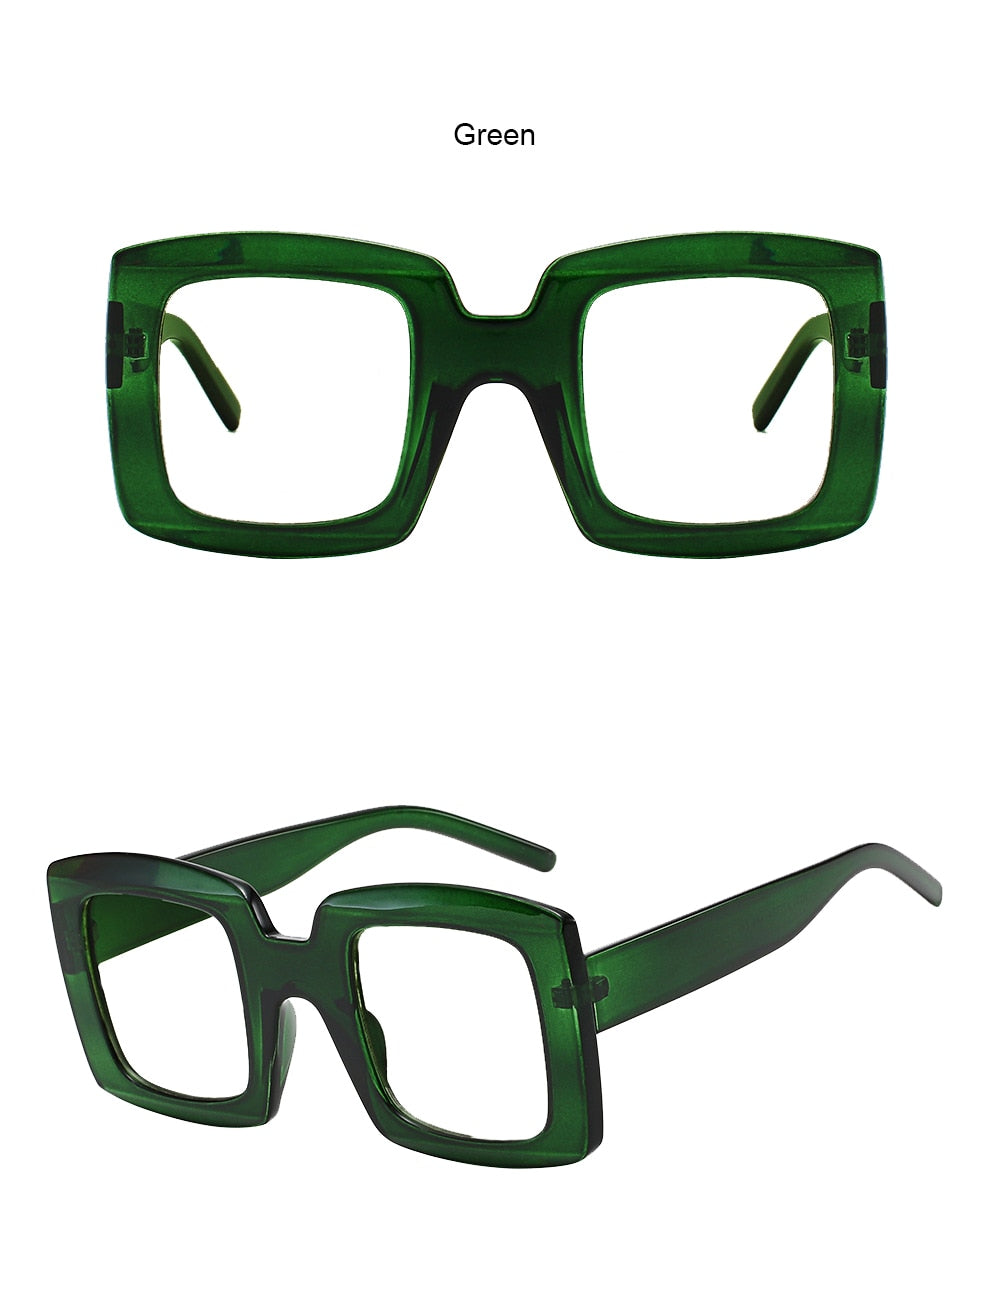 TEEK - Wide Square Reading Glasses | Prescribed or Zero Strength EYEGLASSES theteekdotcom green clear 0 